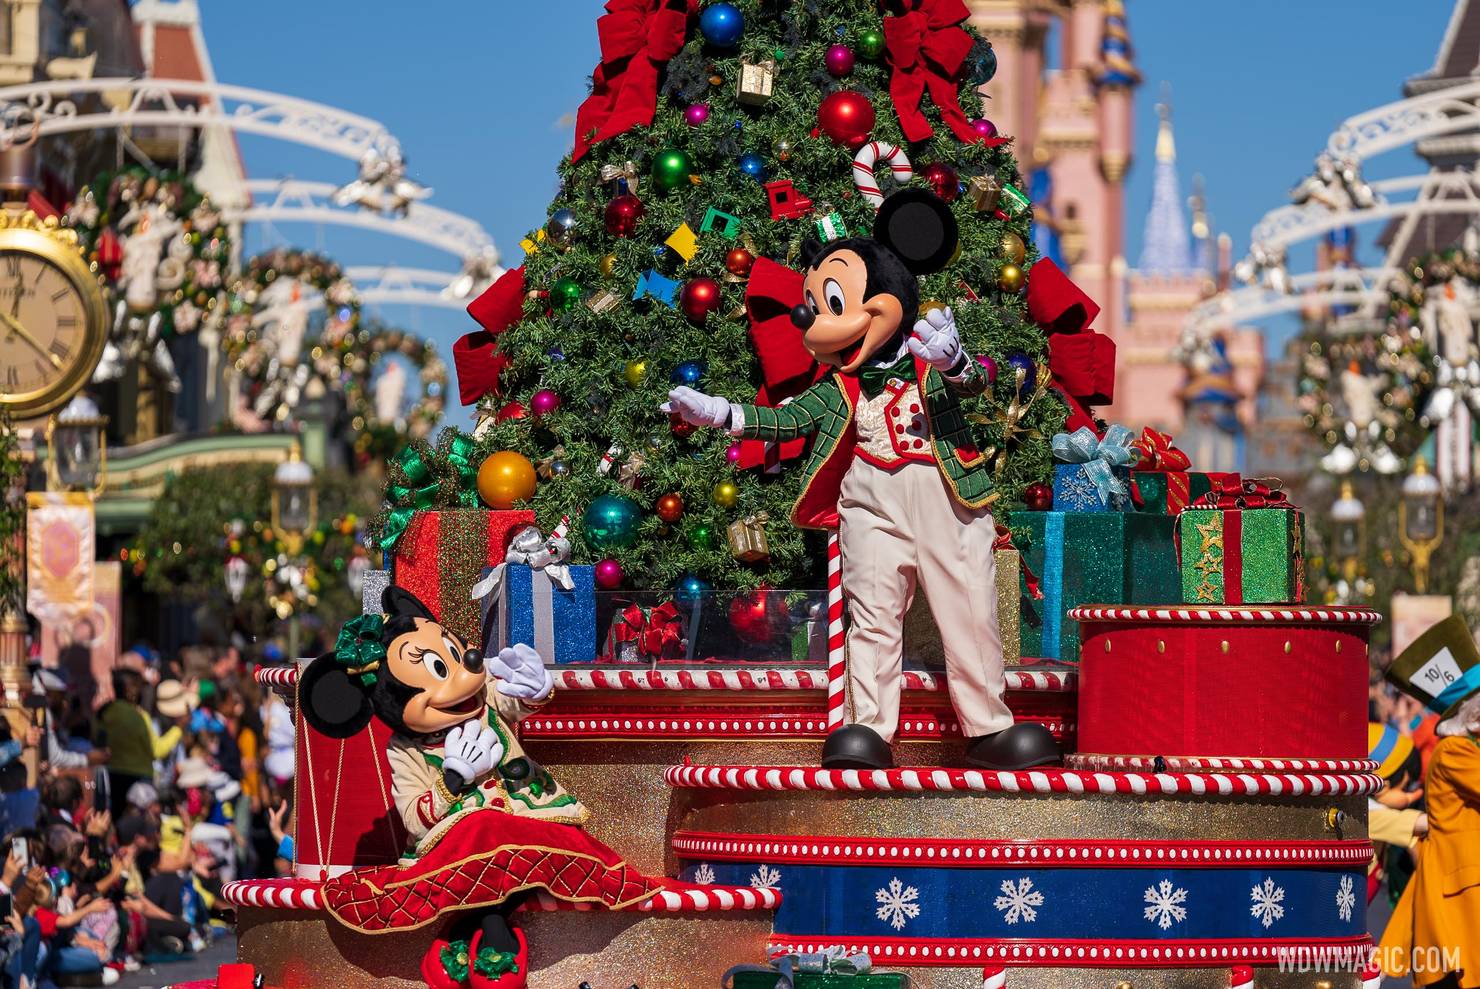 Mickeys-Once-Upon-a-Christmastime-Parade_Full_45769.jpg